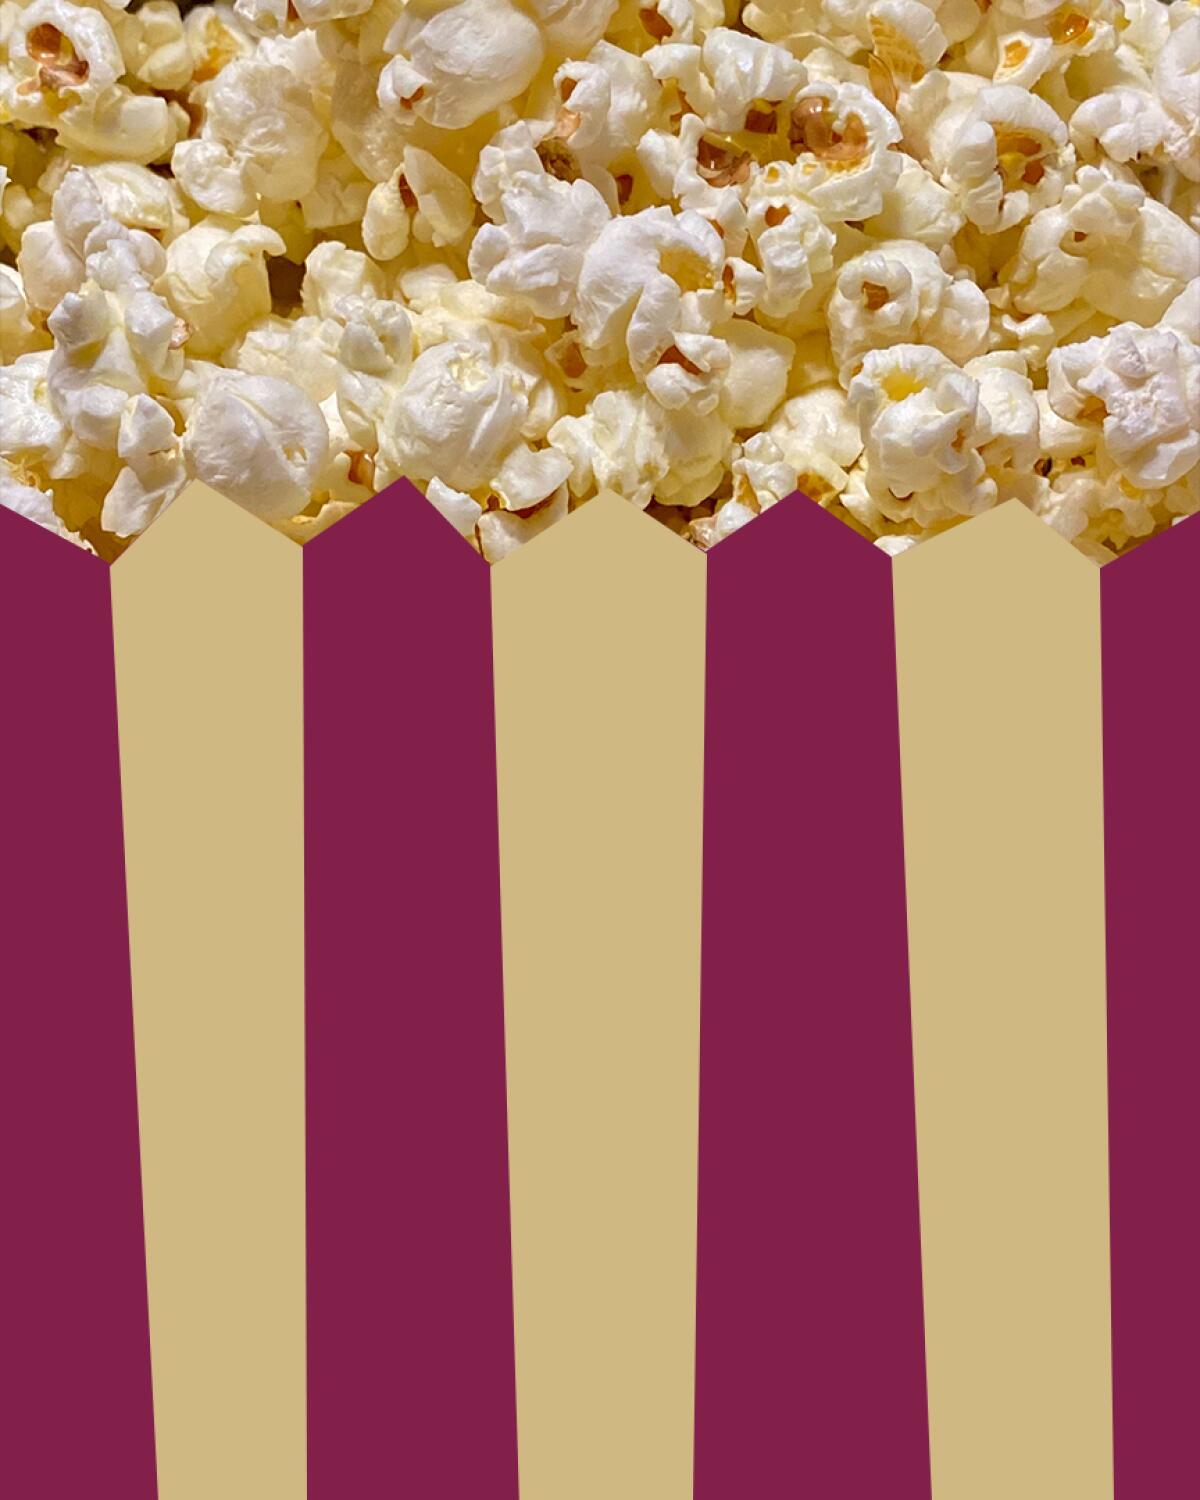 a bag of popcorn